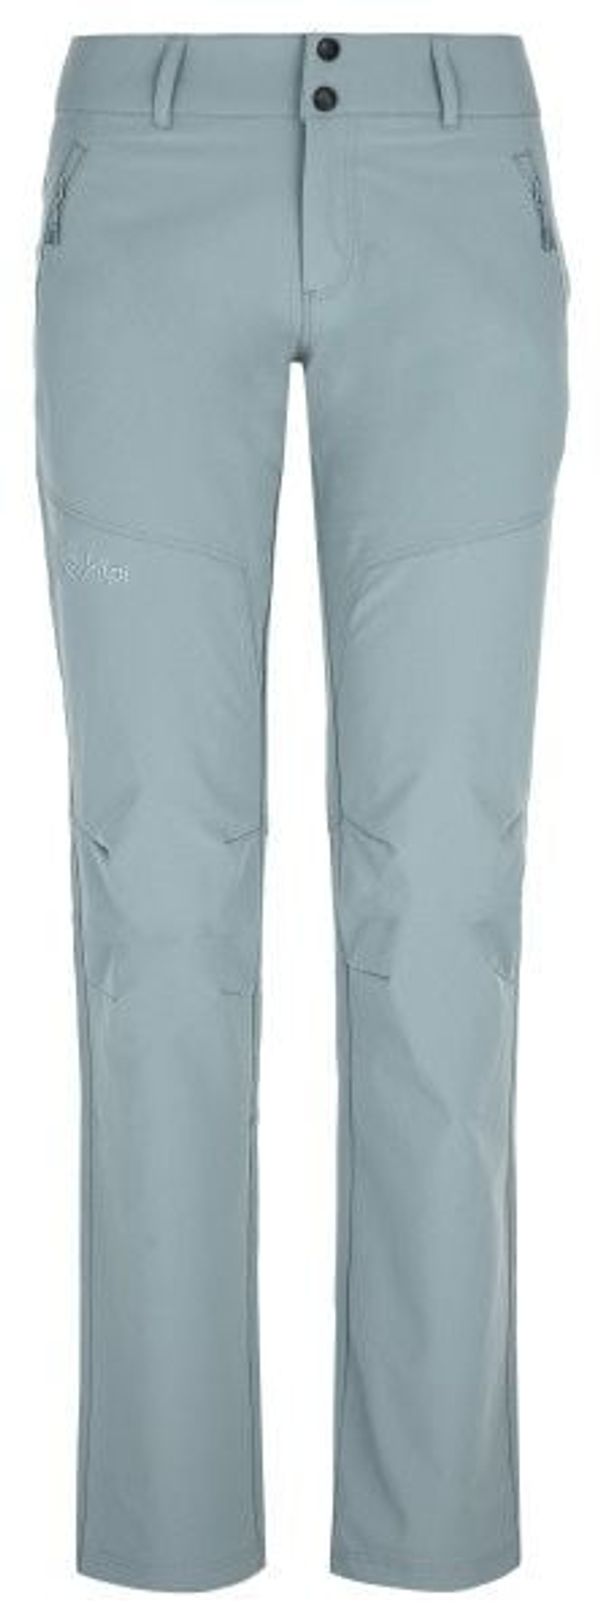 Kilpi Women's outdoor pants KILPI LAGO-W light blue